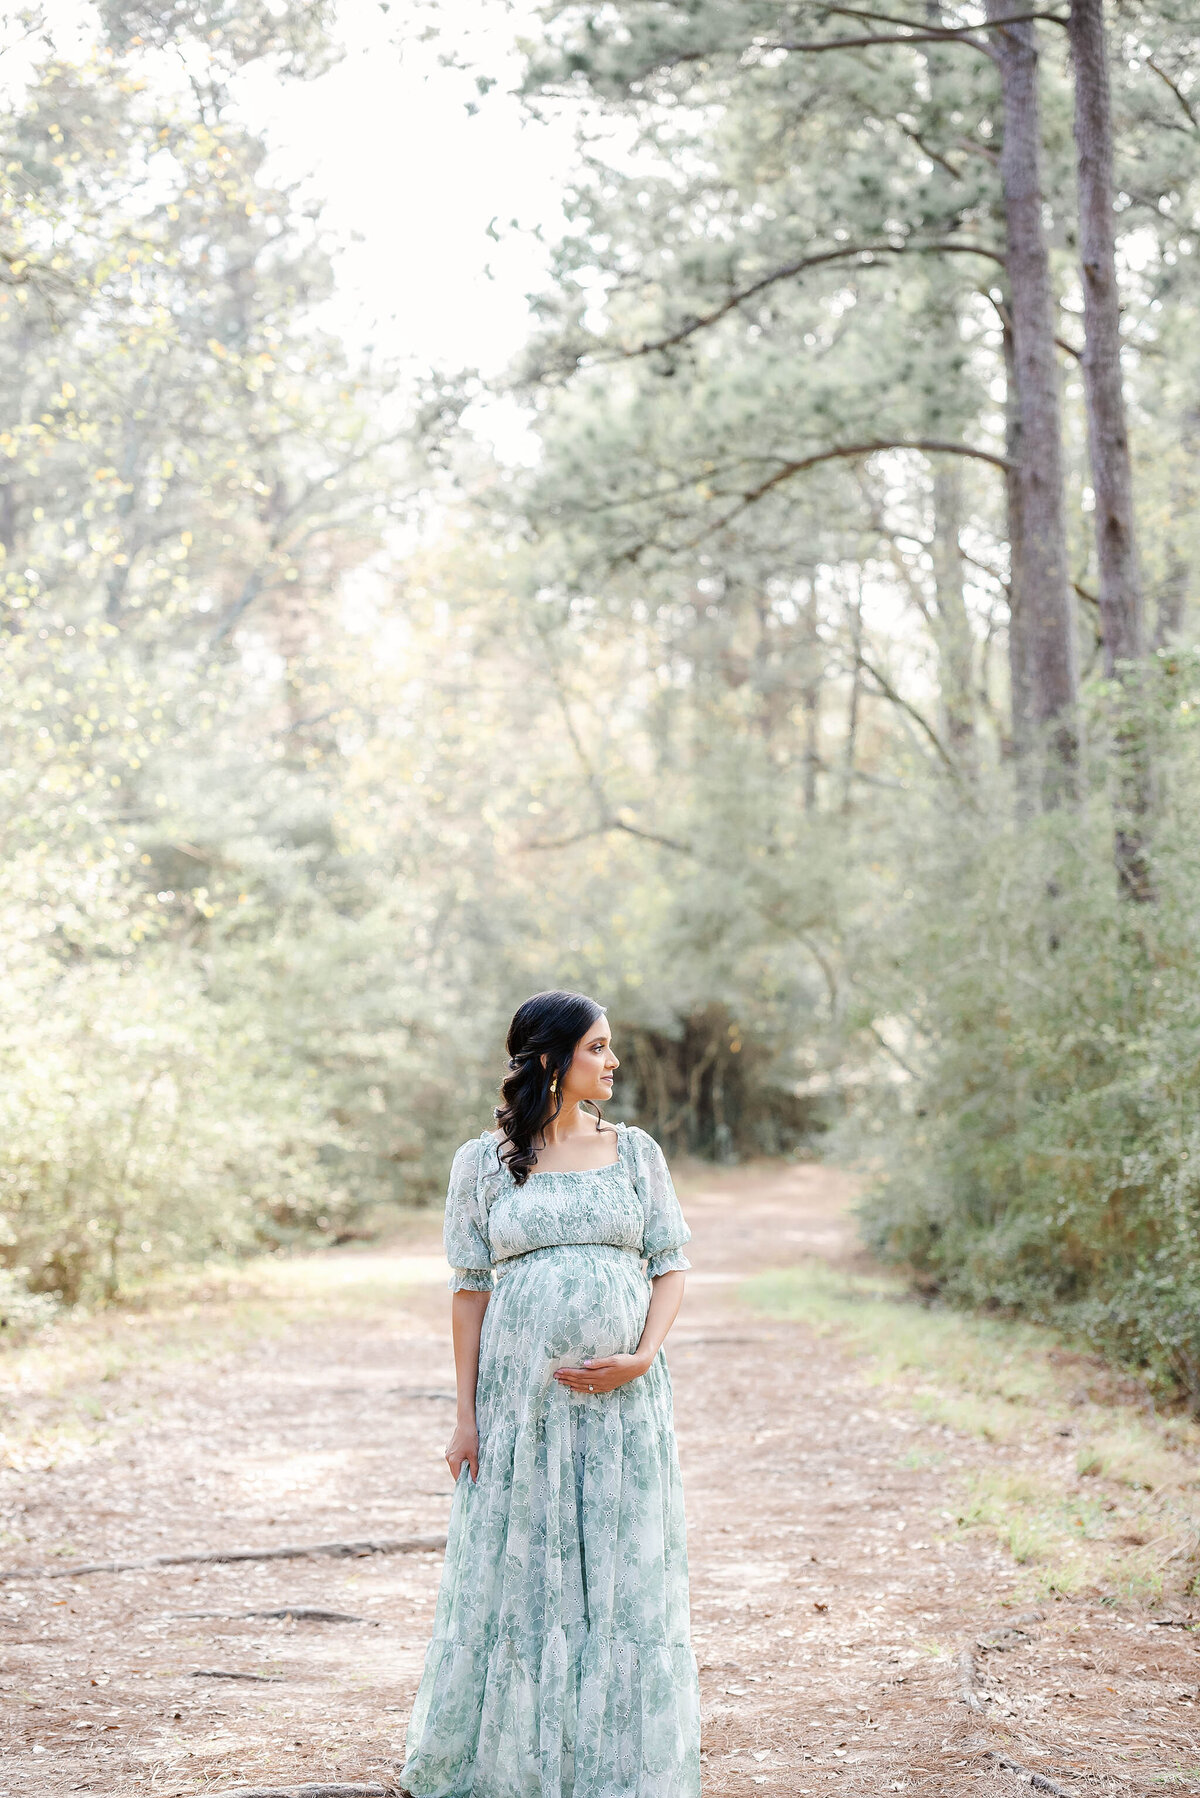 Maternity Photography  Spring, Texas - Shannon Reece Jones